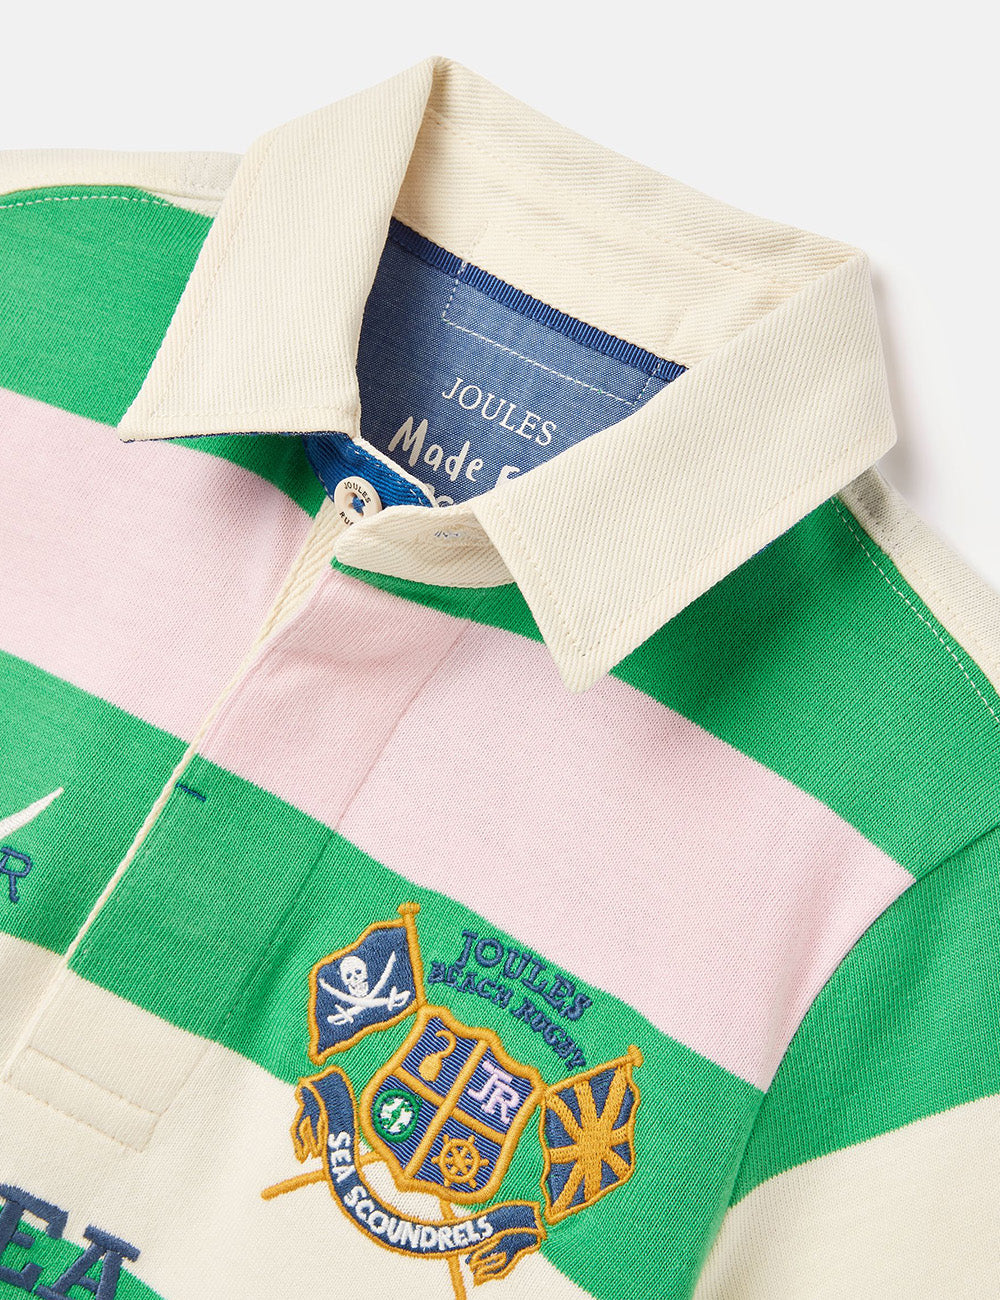 Joules Tournament Polo Shirt - Pink/Green Stripe